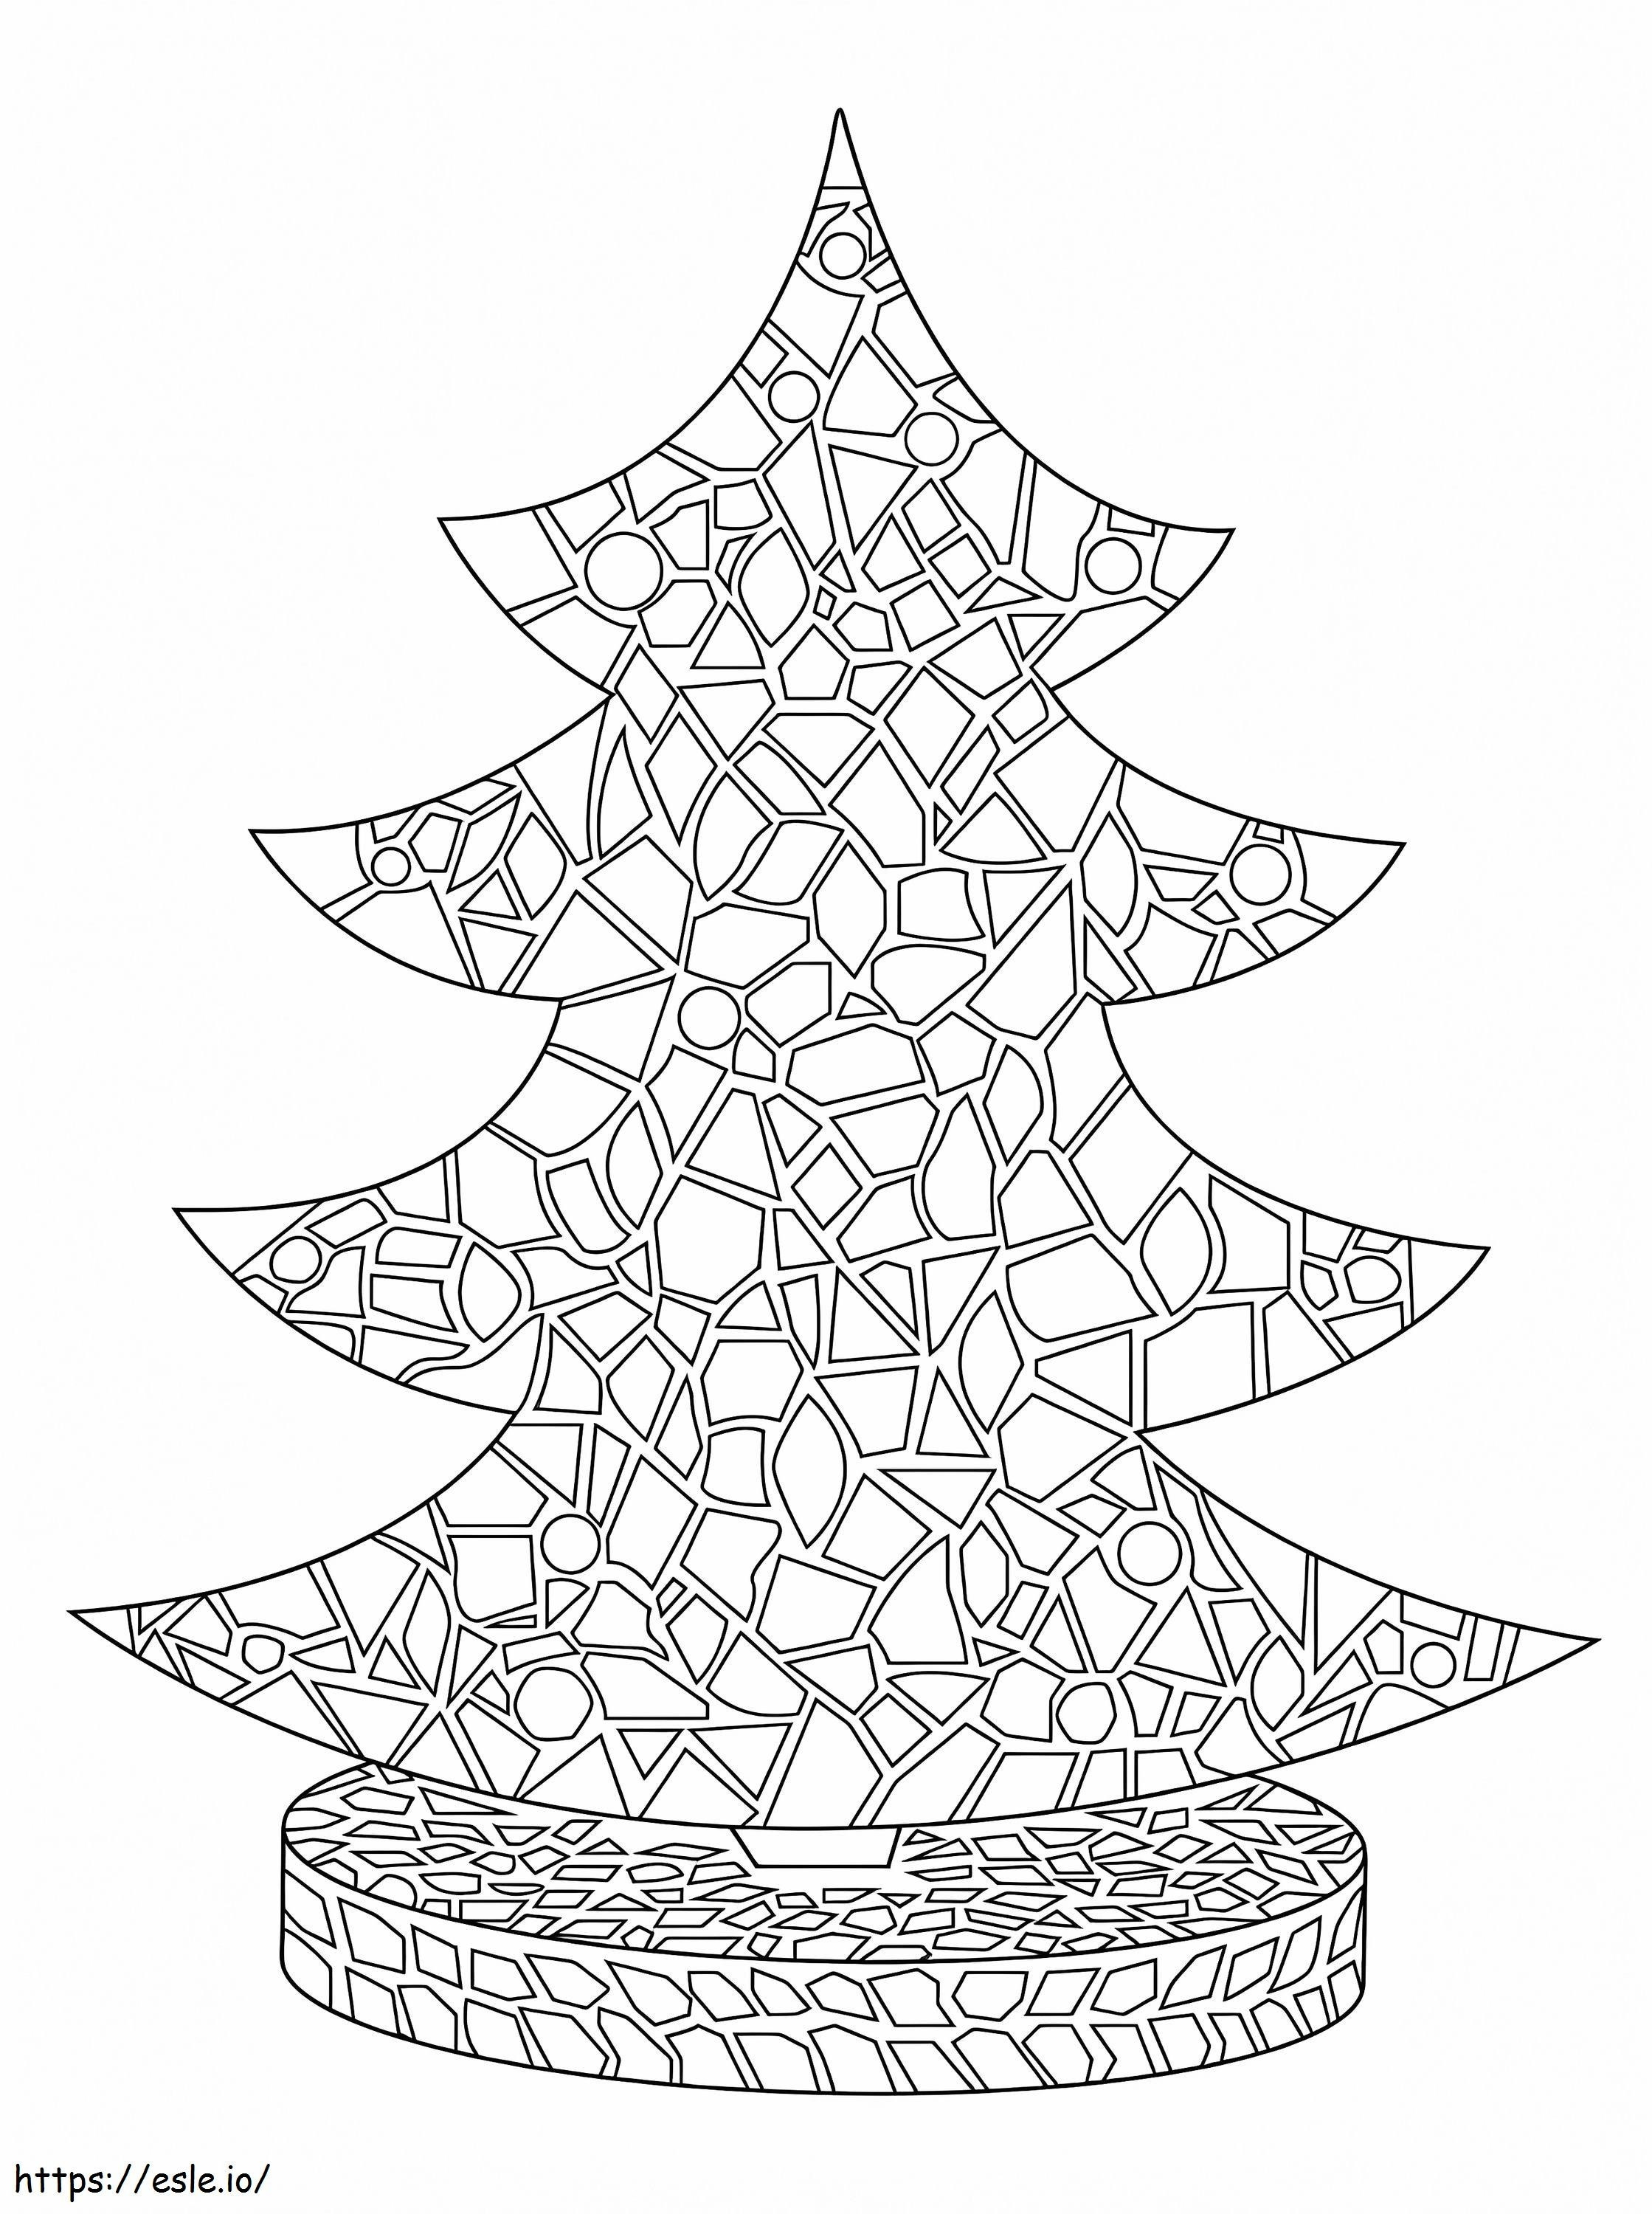 Mosaic Christmas Tree coloring page